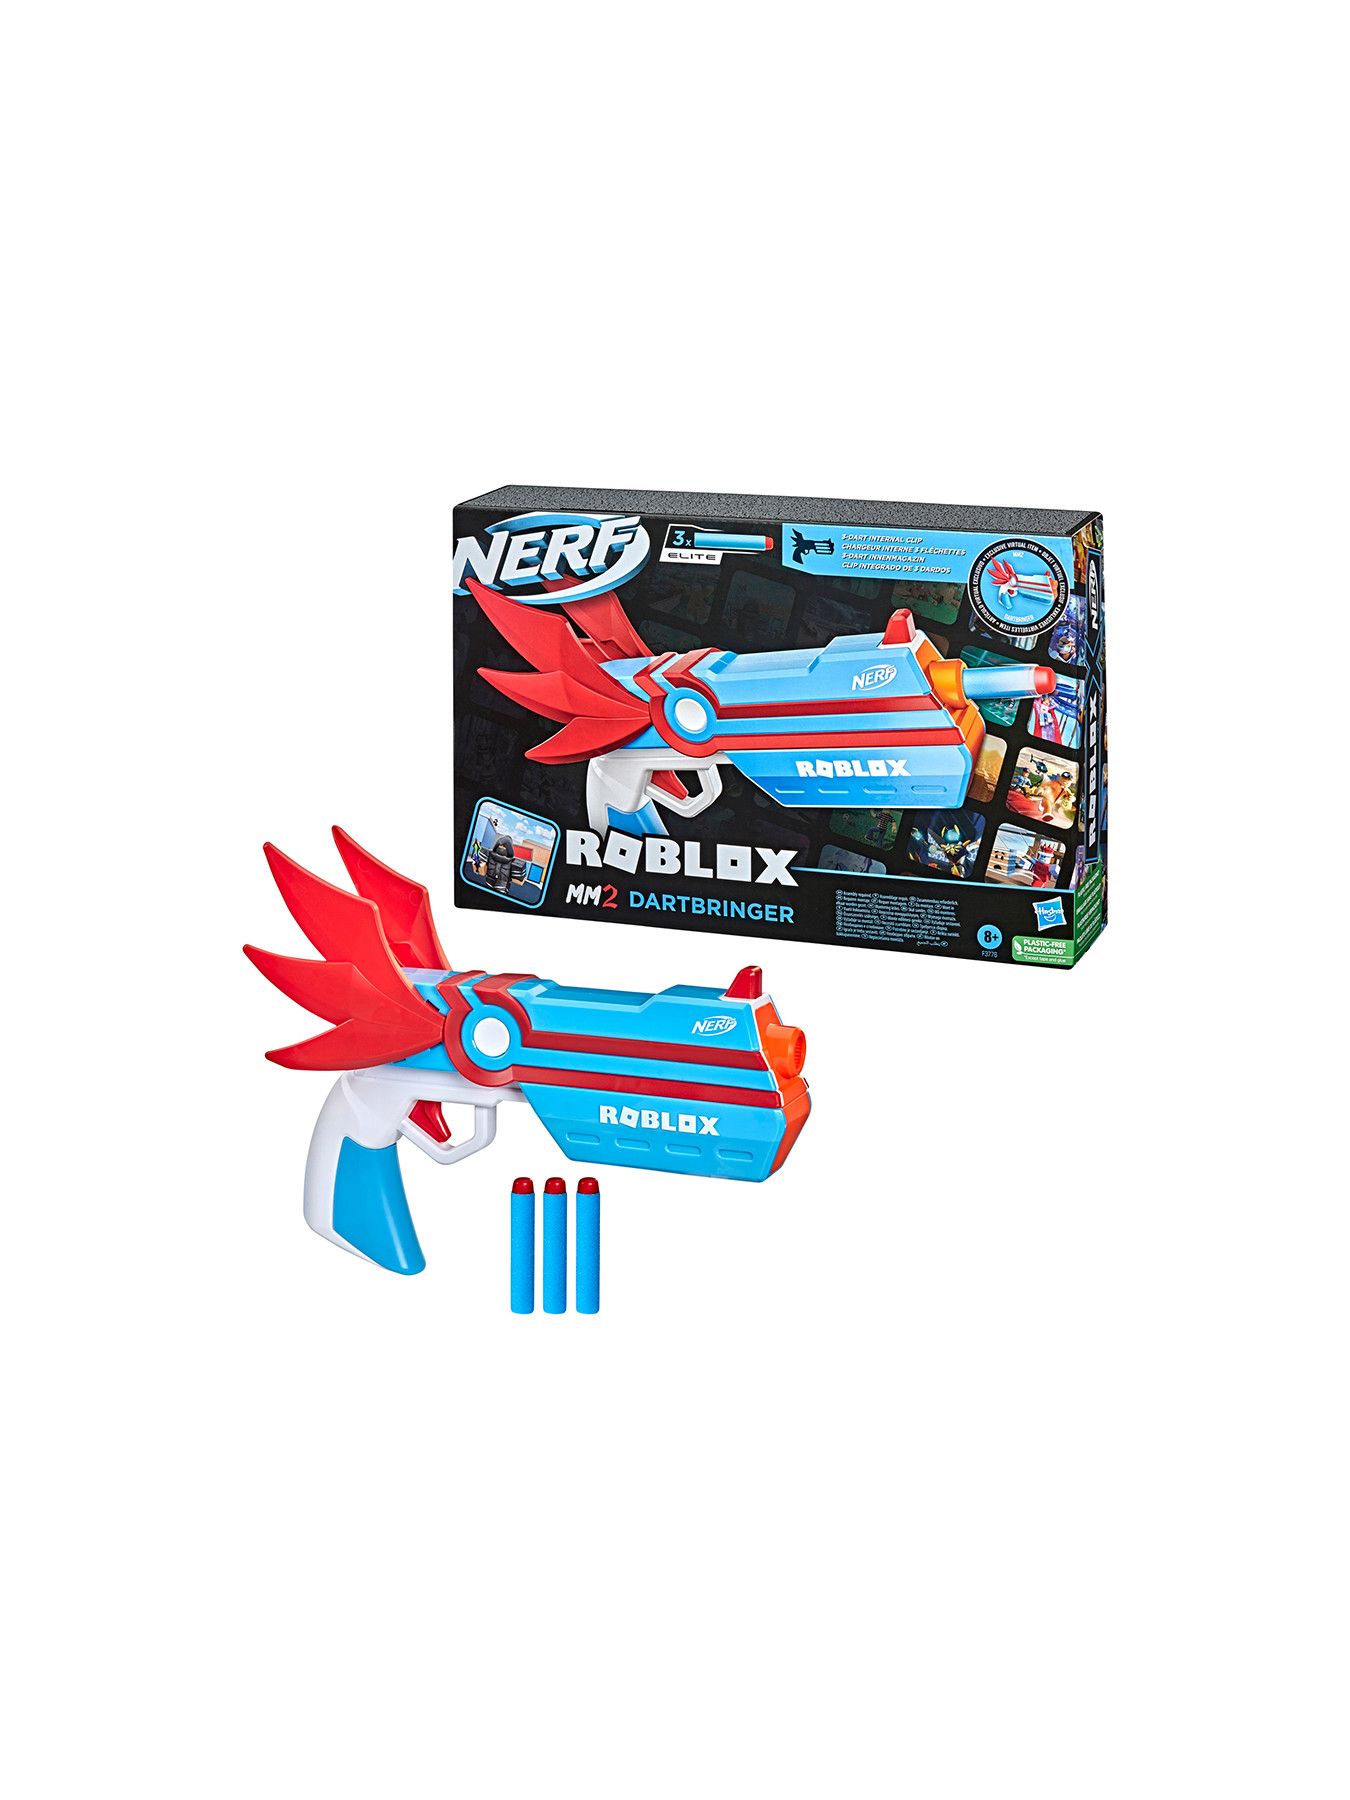 Nerf Nerf Roblox MM2: Dartbringer Dart Blaster